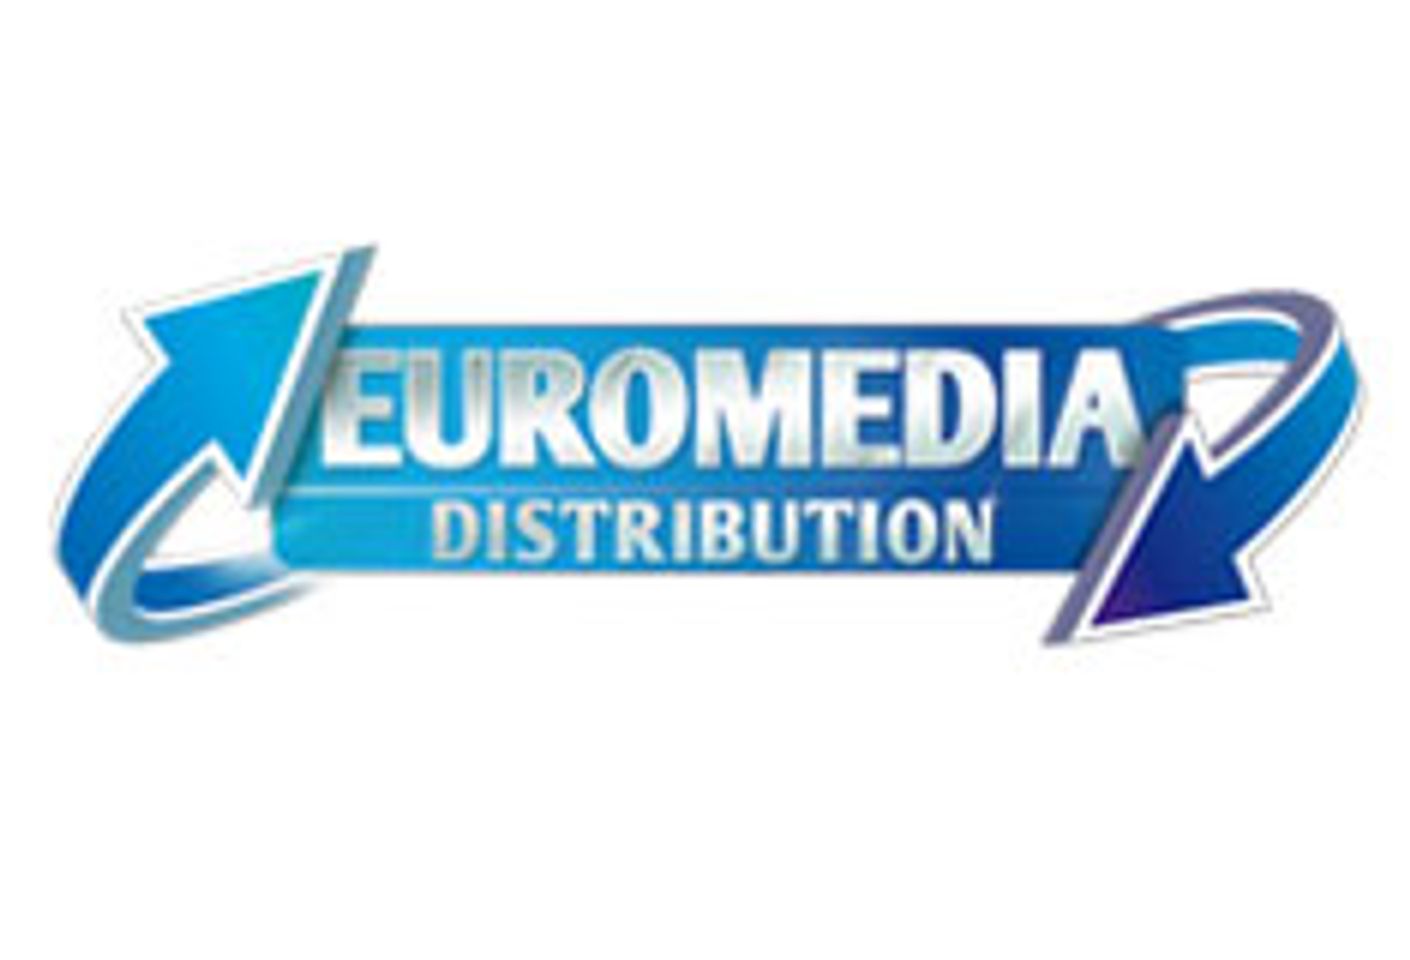 Euromedia Signs Benny Morecock to Global Representation, Distribution Deal